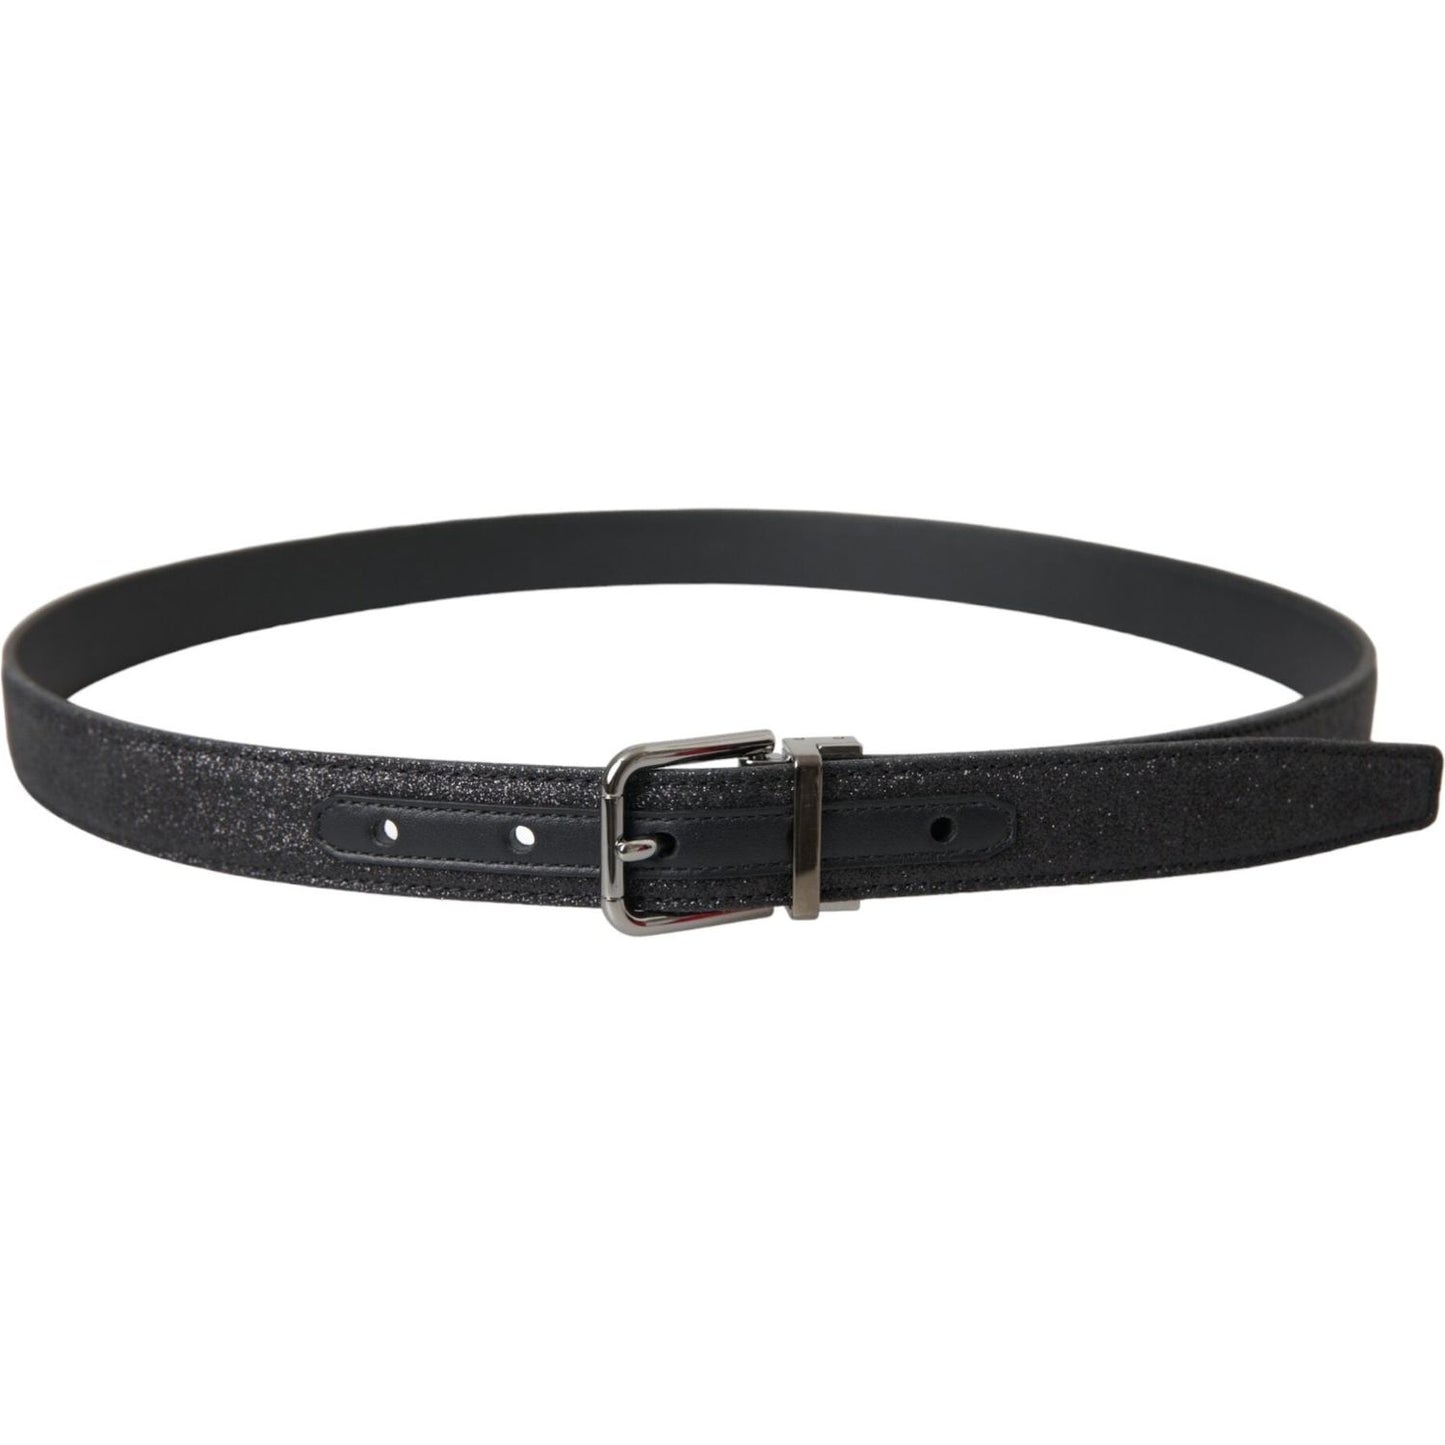 Black Glittered Leather Silver Buckle Belt